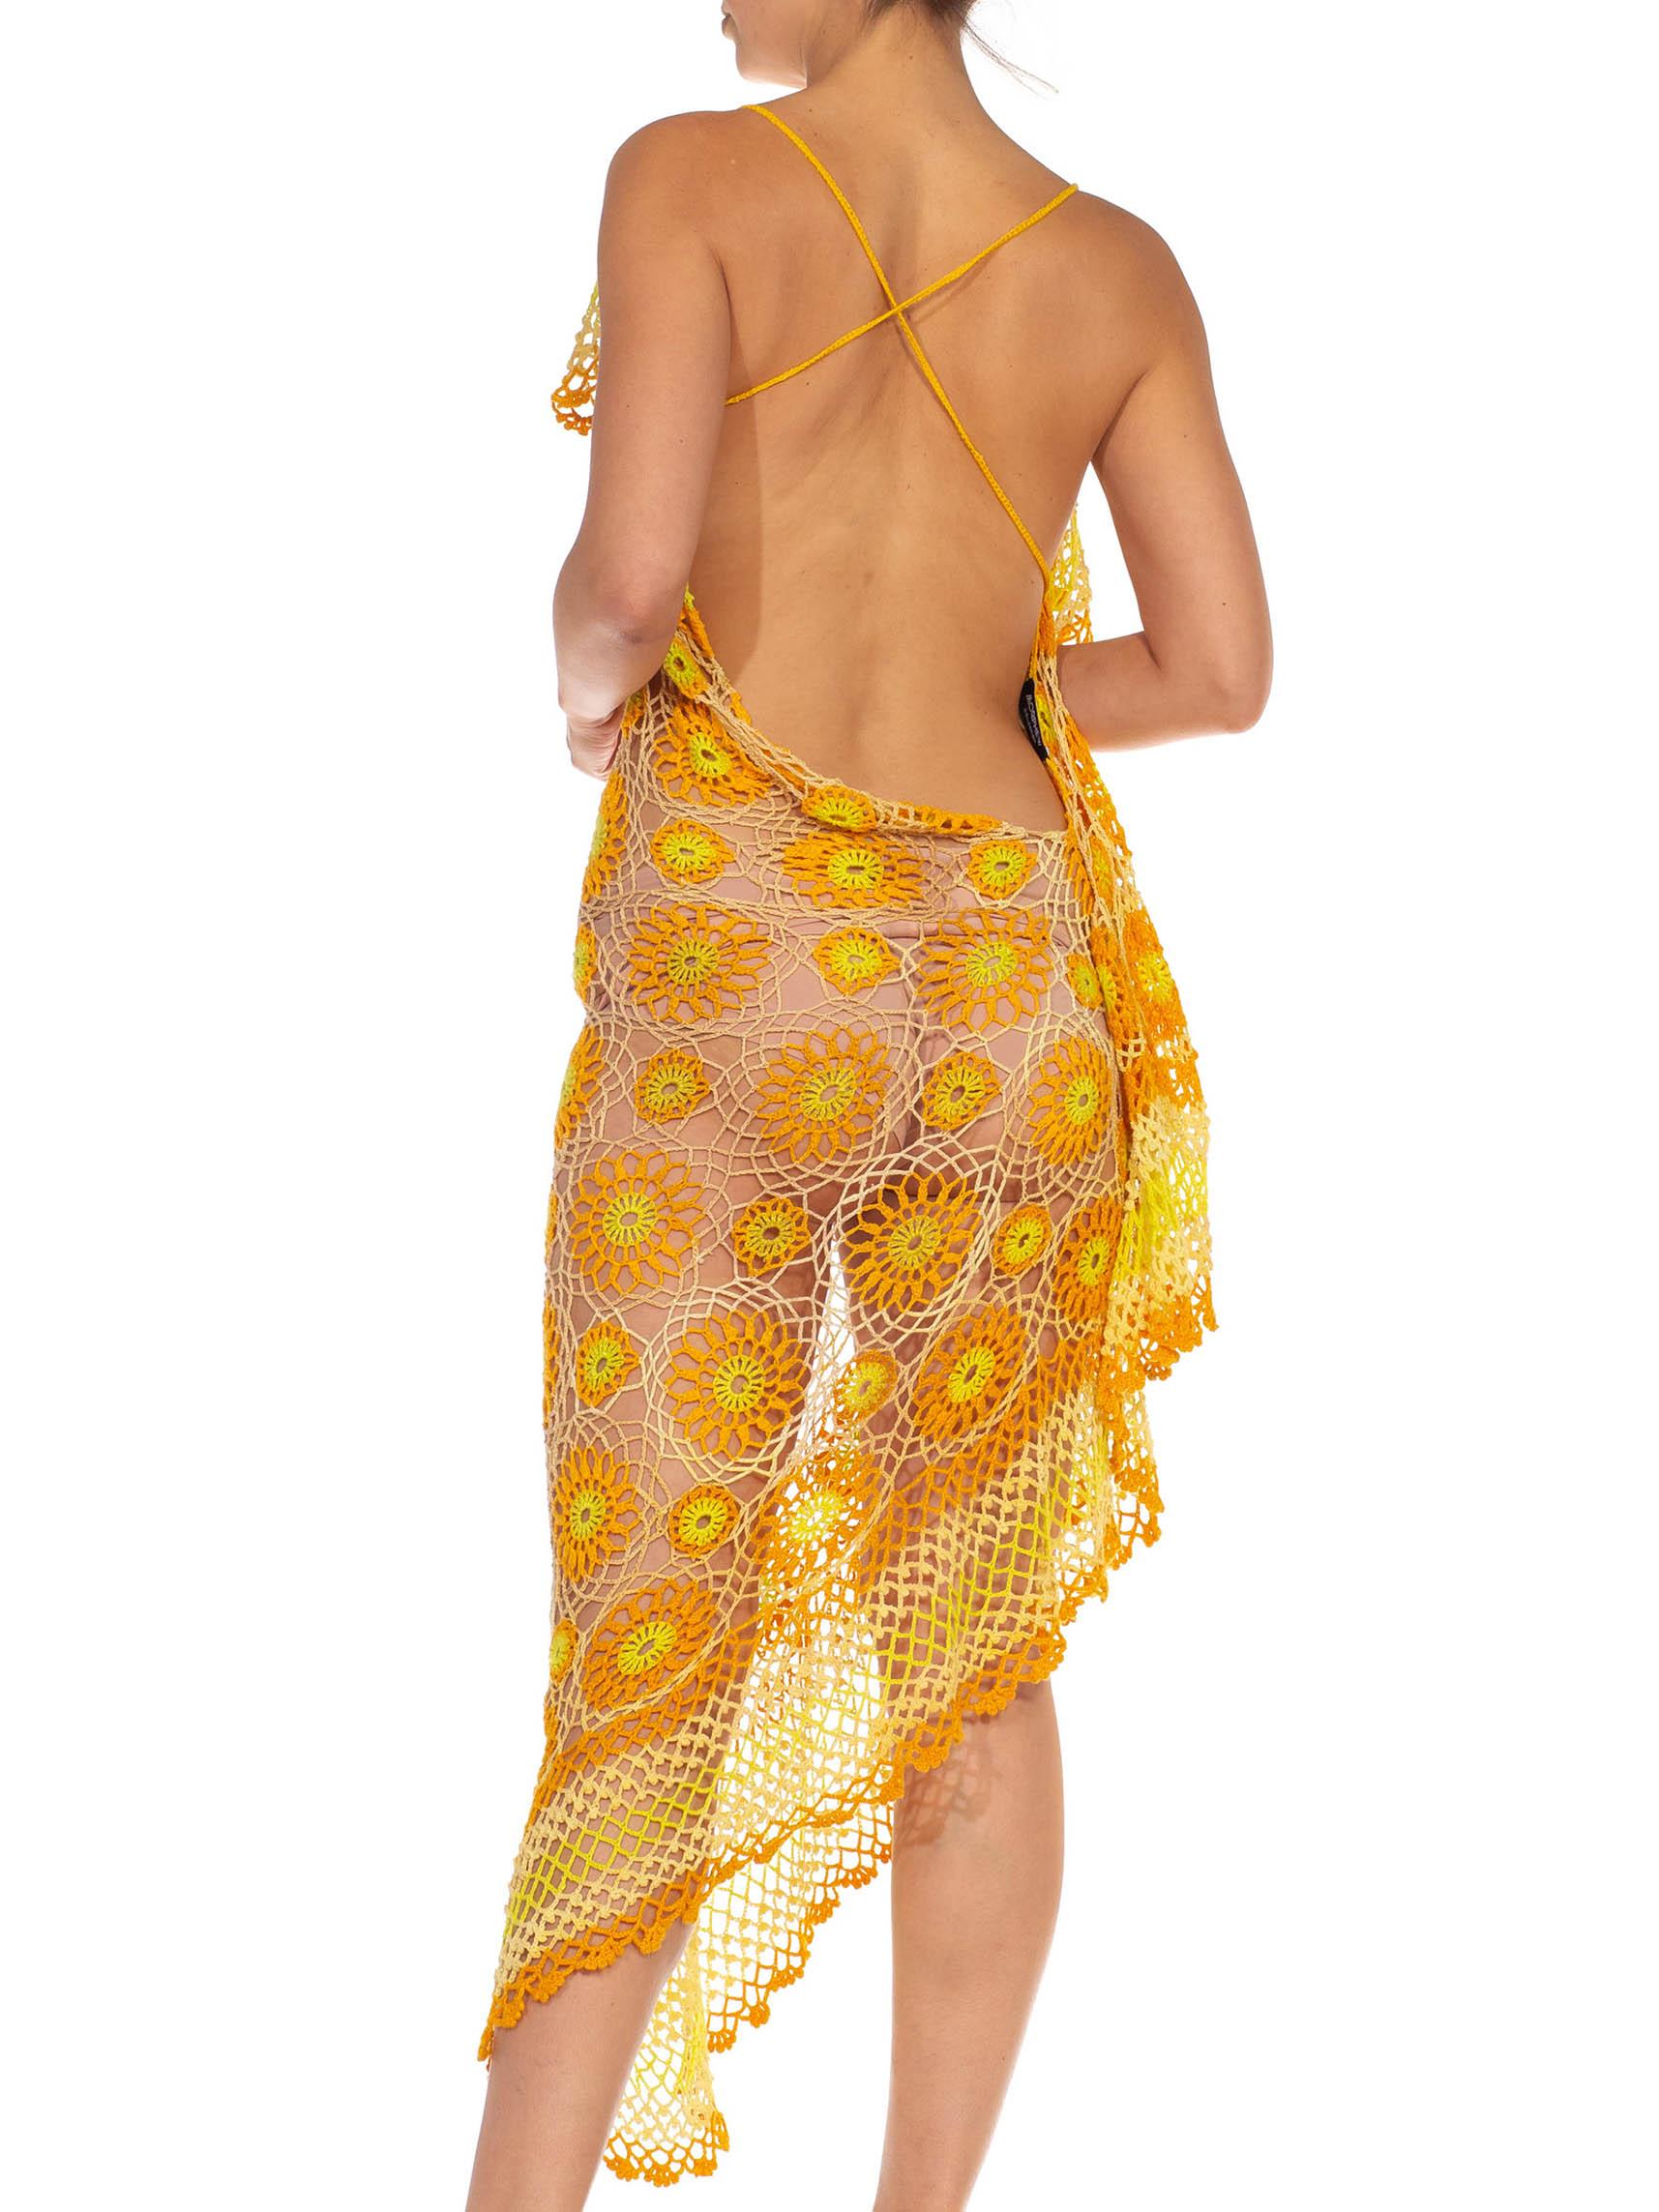 Morphew Collection Orange Yellow & White Cotton Floral Crochet Sexy Dress 3